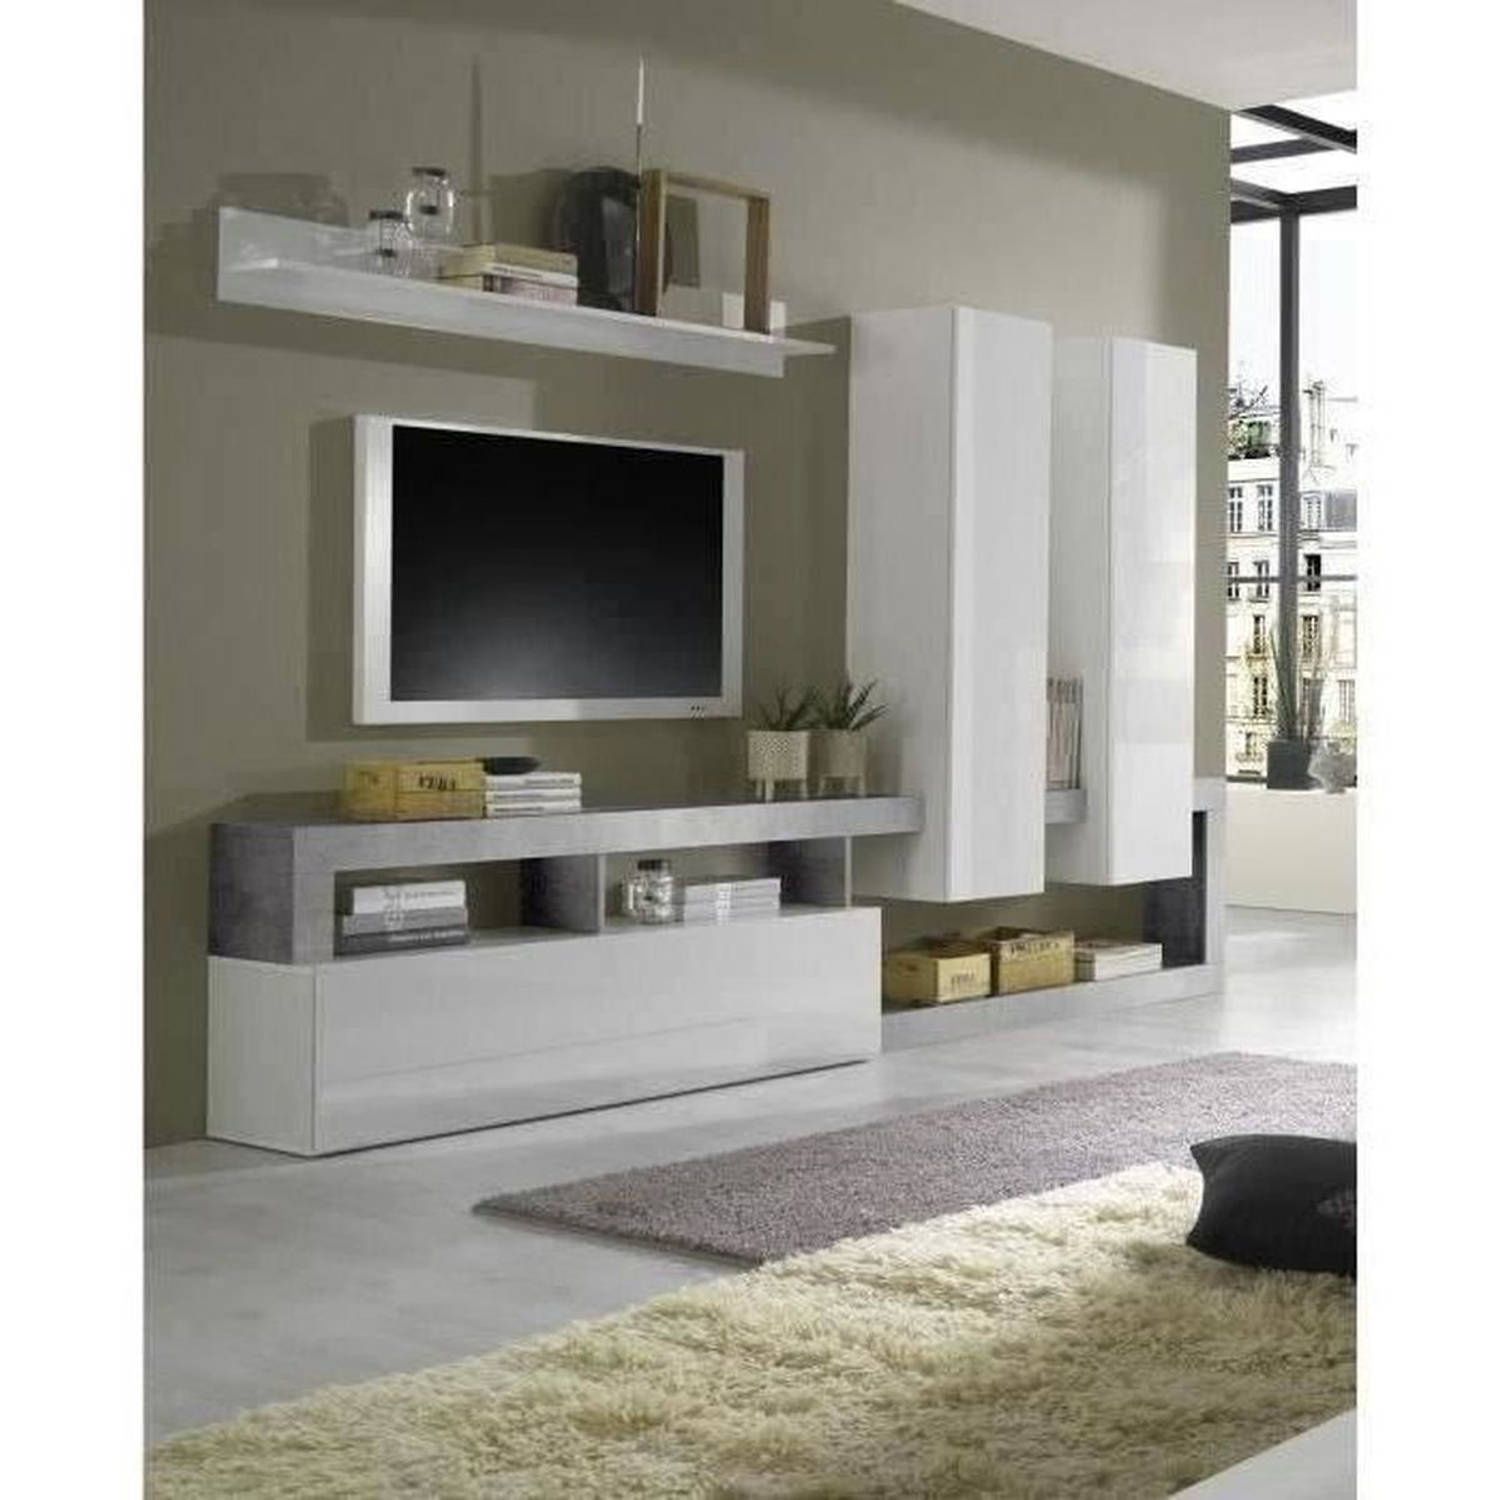 Maestro TV-wandmeubel in hedendaagse stijl - Wit gelakt en betondecor - L277 x H173 x D75 cm